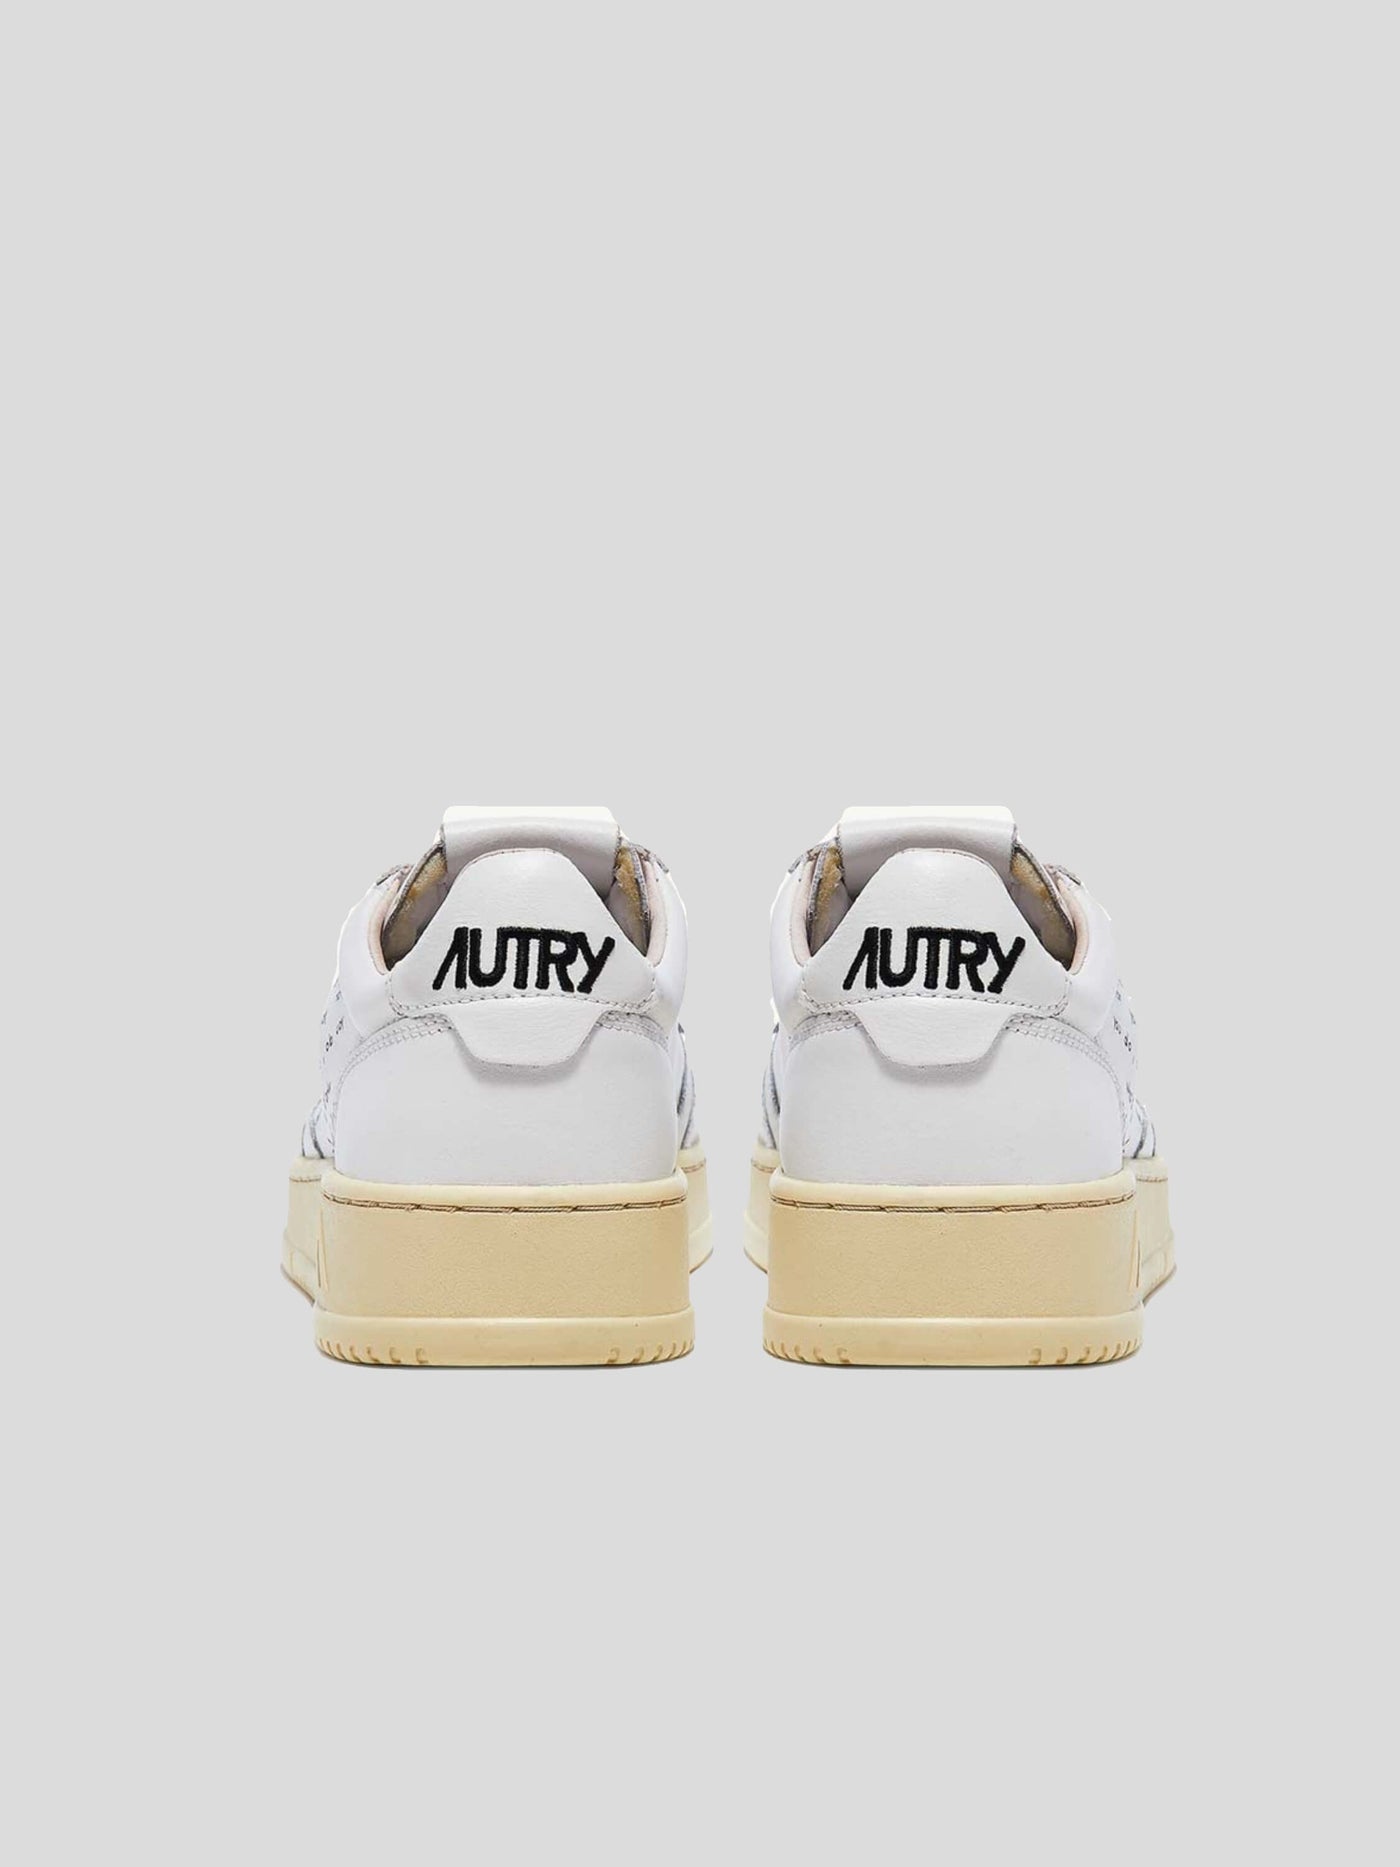 Autry Sneaker | Low Top Sneaker Written Schriftzug in weiß-schwarz | AULM WL01 written / ADAM/EVE